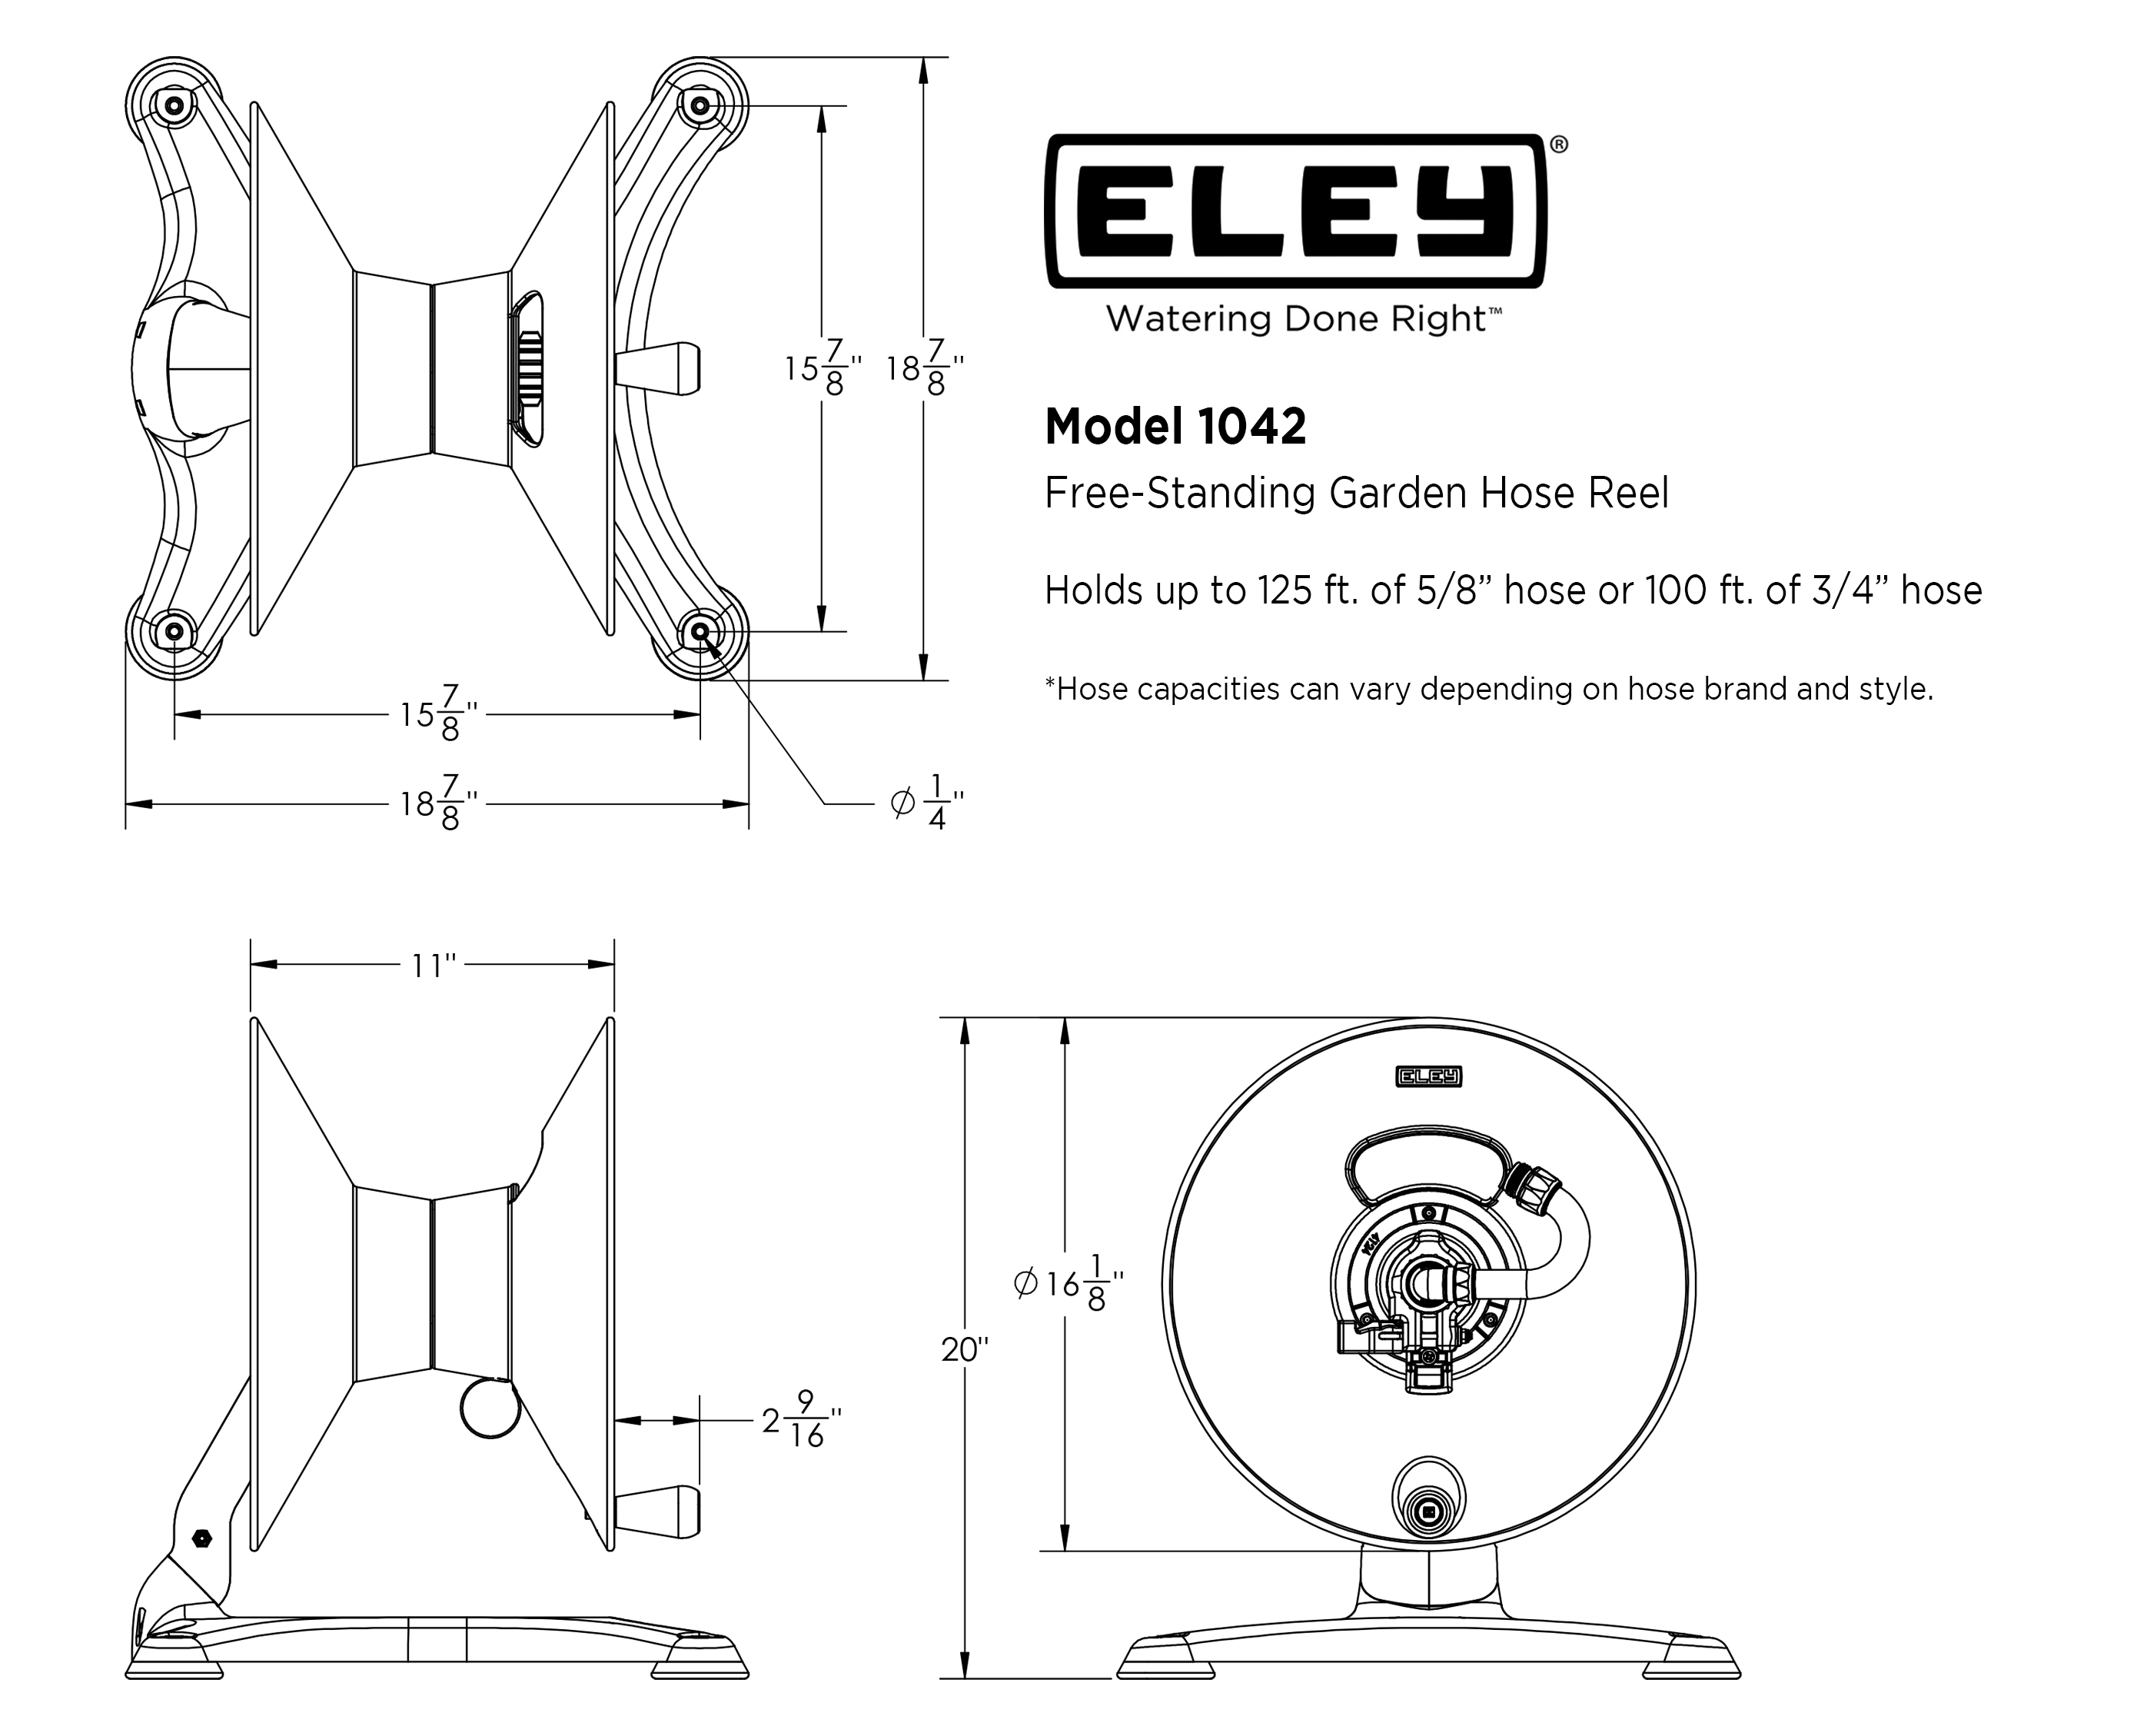 ELEY Model 1042 free-standing garden hose reel dimensions